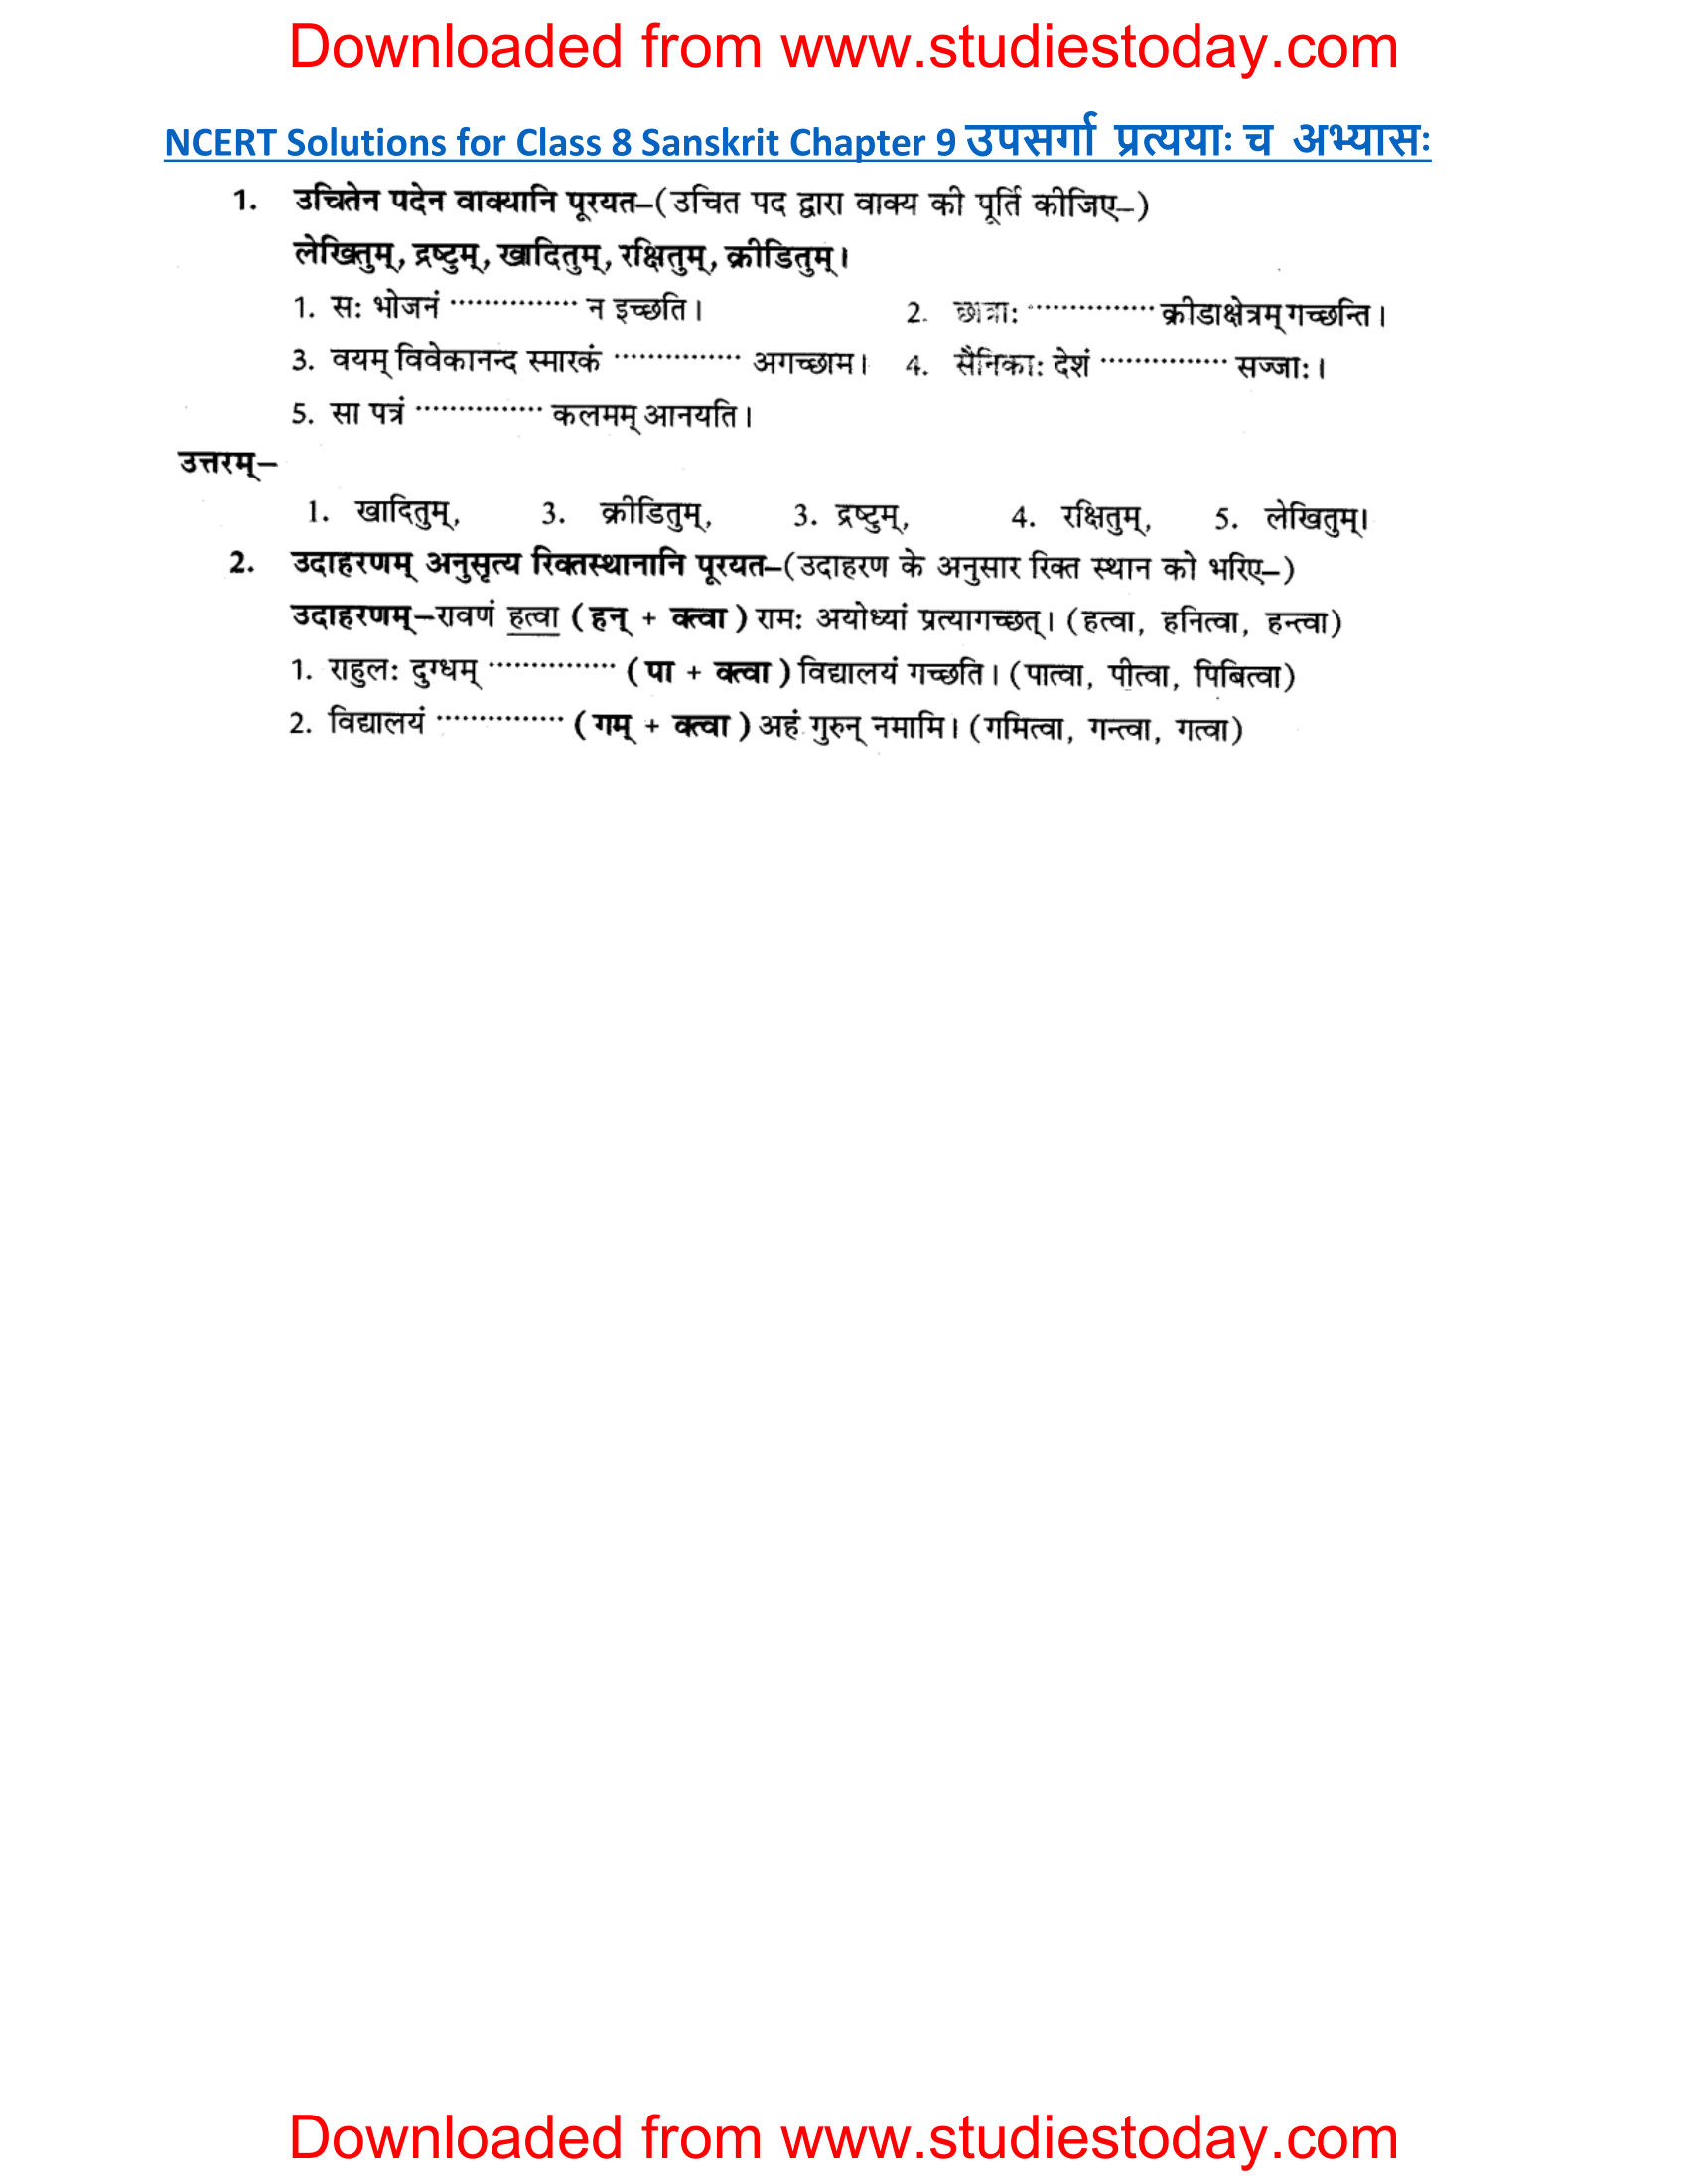 ncert-solutions-class-8-sanskrit-chapter-9-upsarga-pratya-ch-abhyas-1